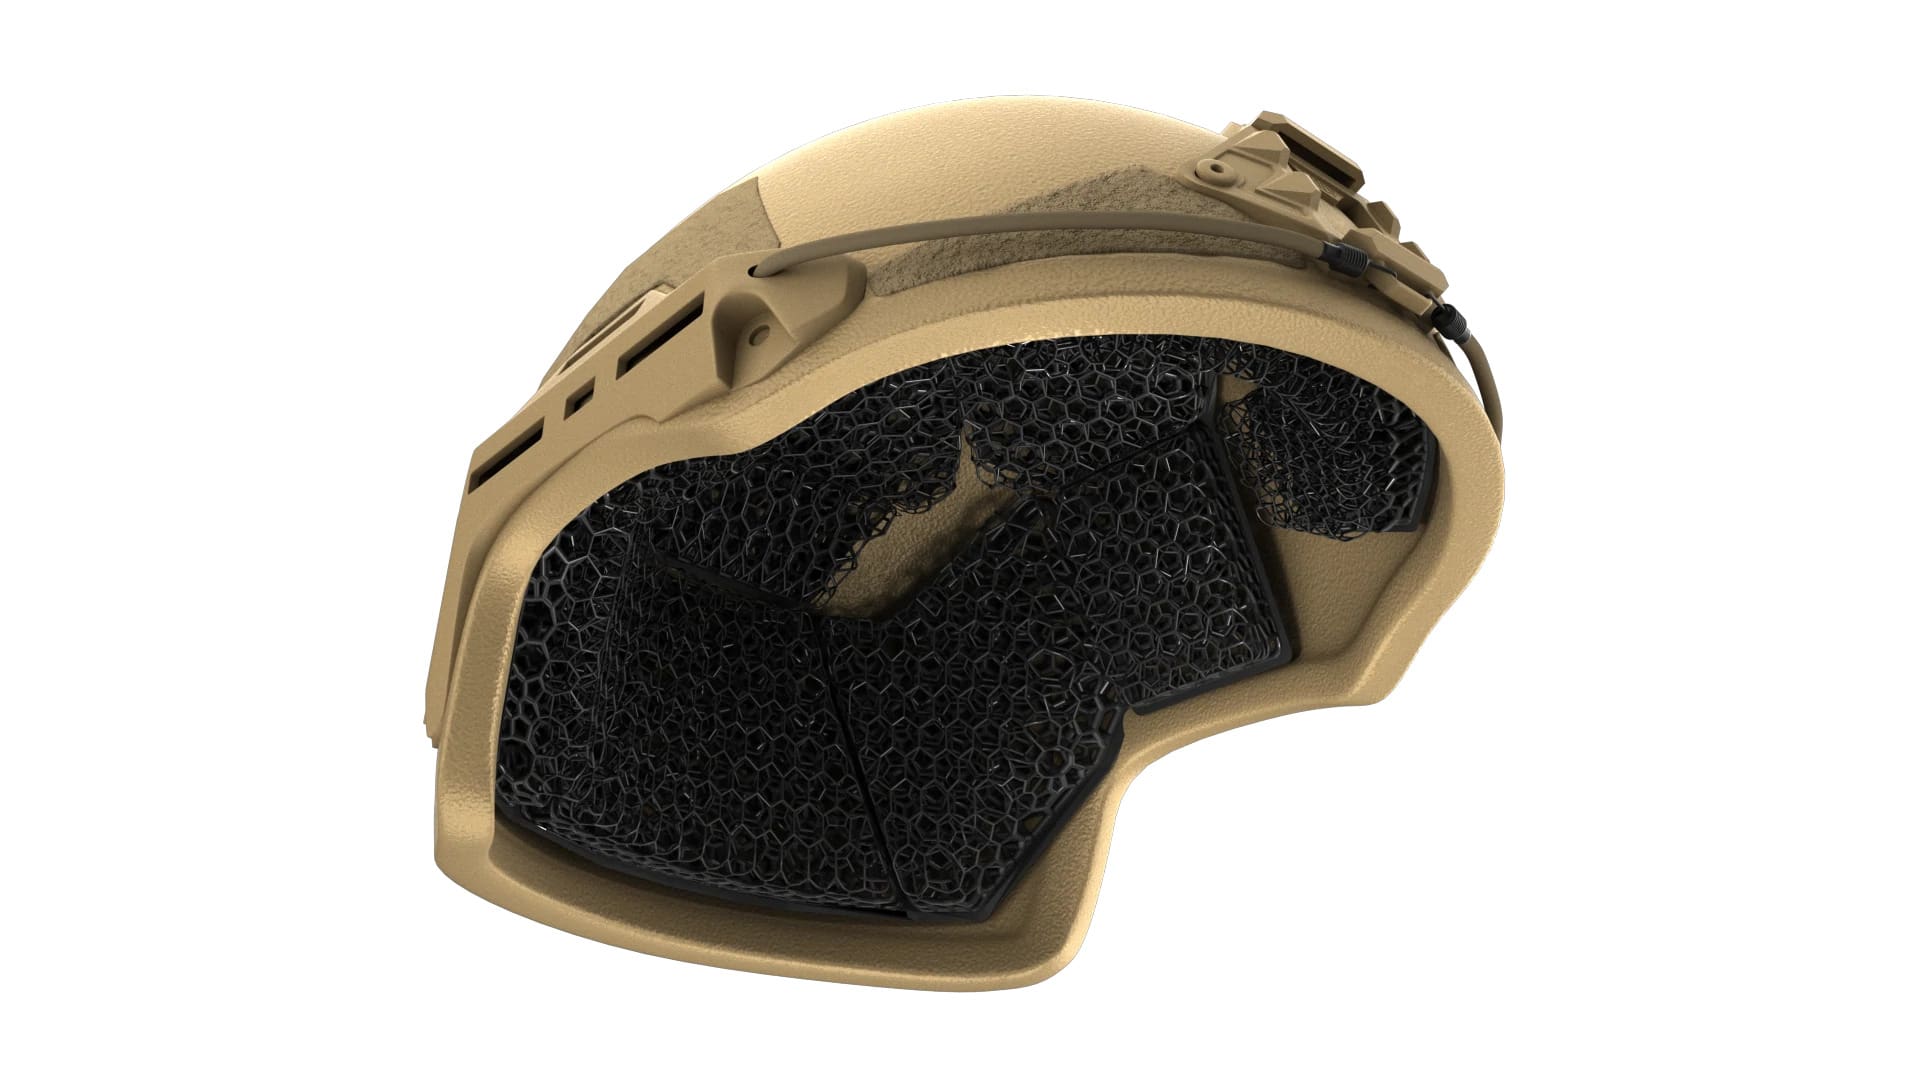 Micro Lattice Pads inside of helmet